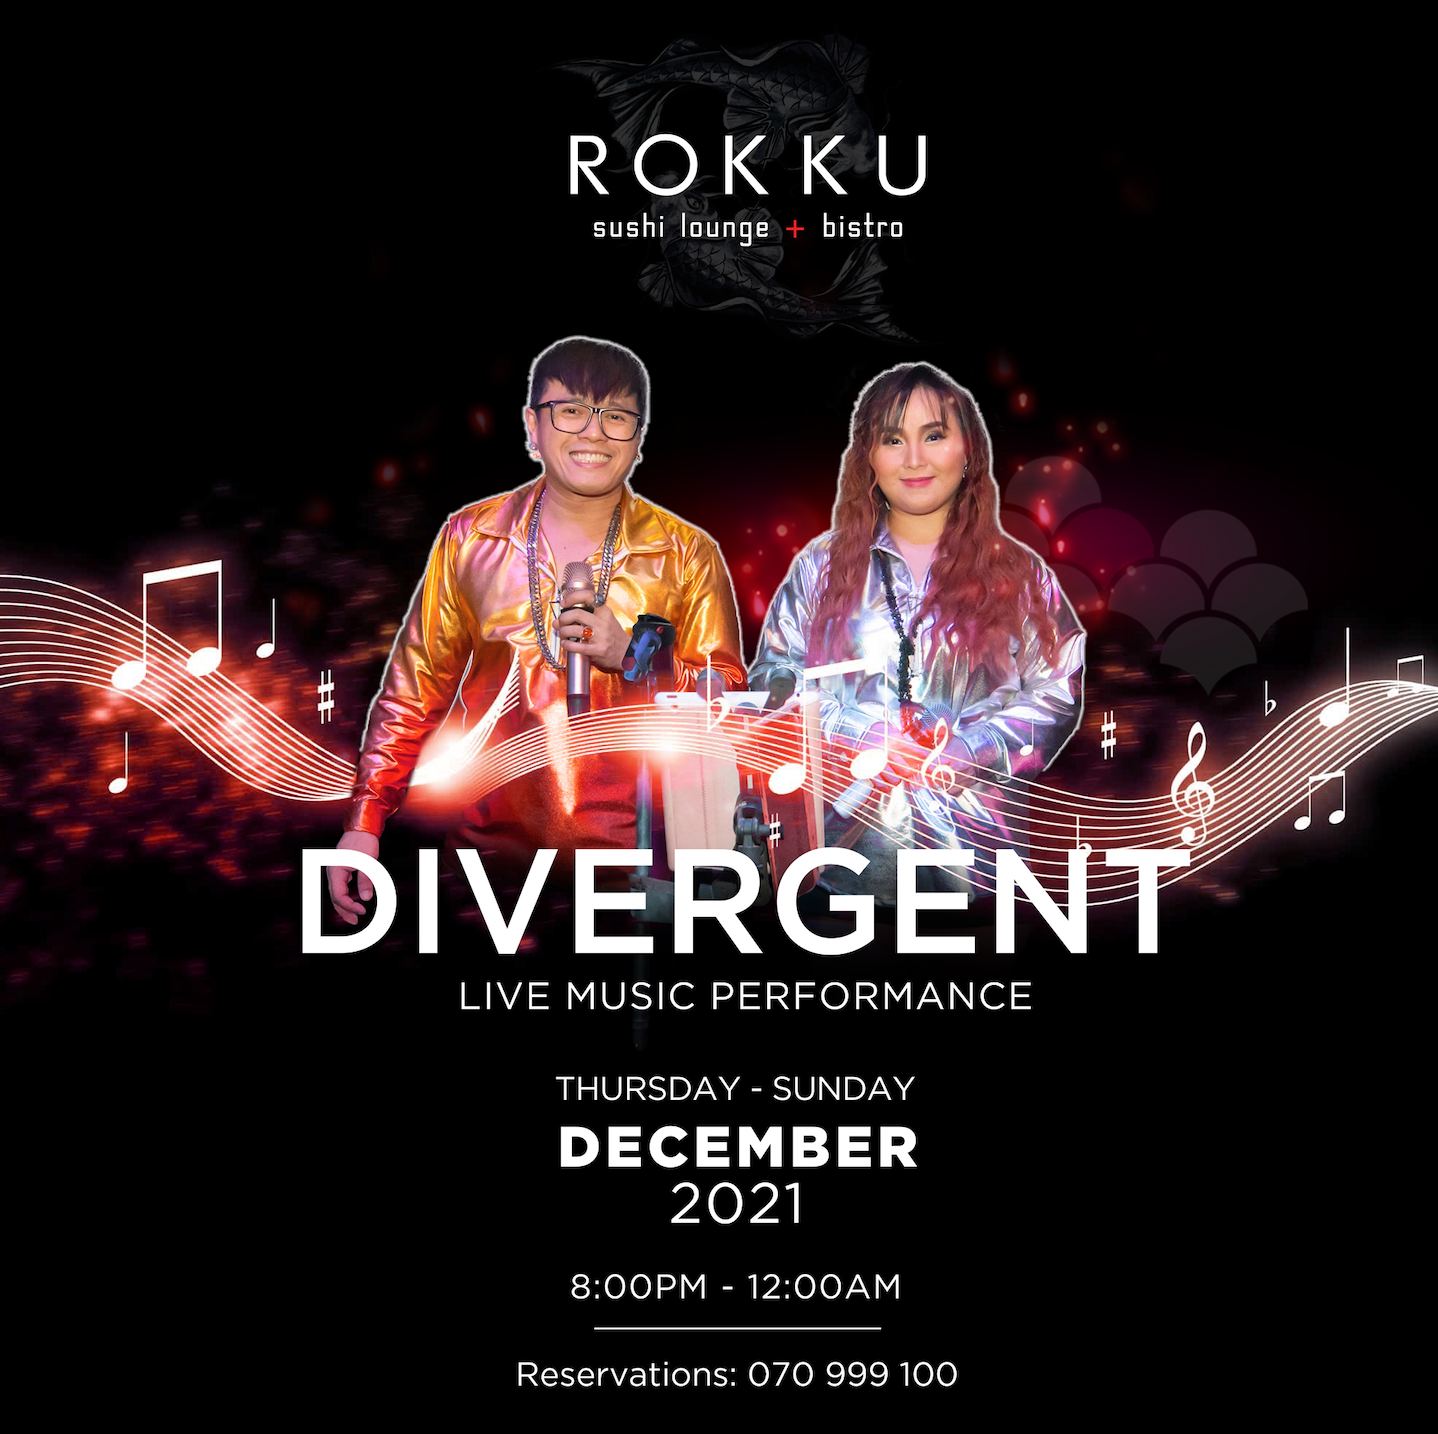 GIVERGENT LIVE MUSIC PERFORMANCE AT ROKKU ON THURSDAY – SUNDAY